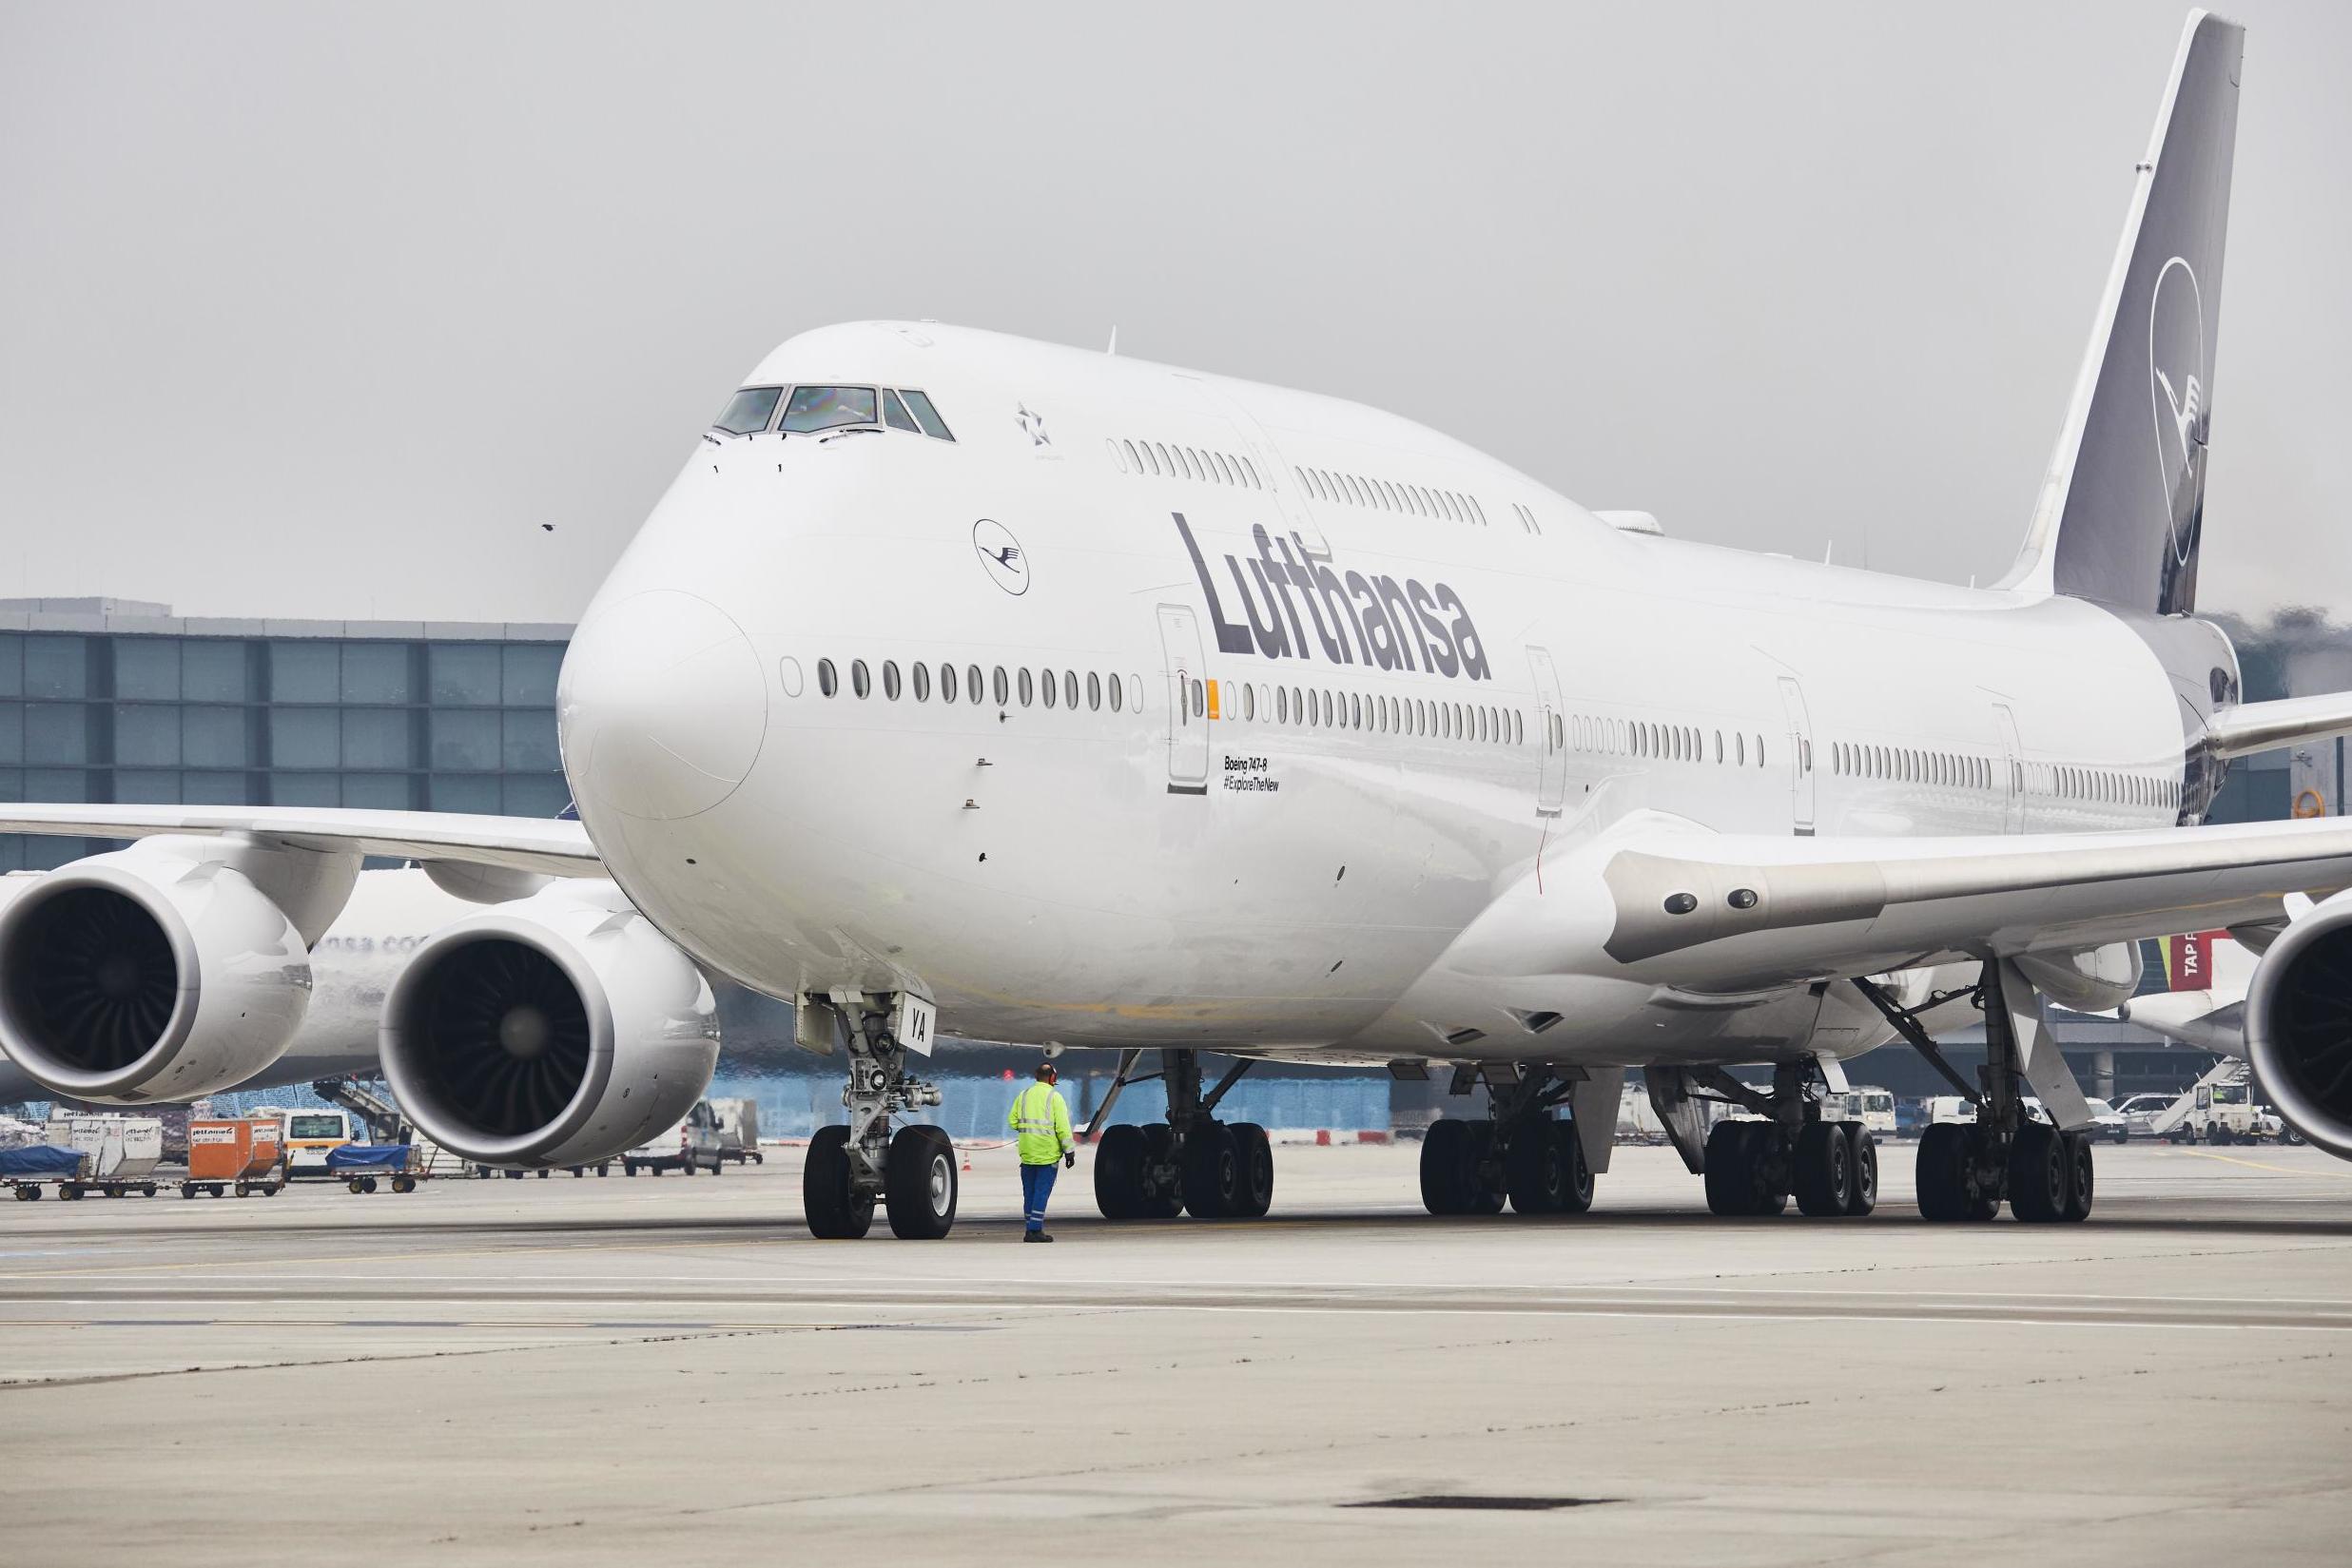 Lufthansa strike 700 flights cancelled stranding more that 4,000